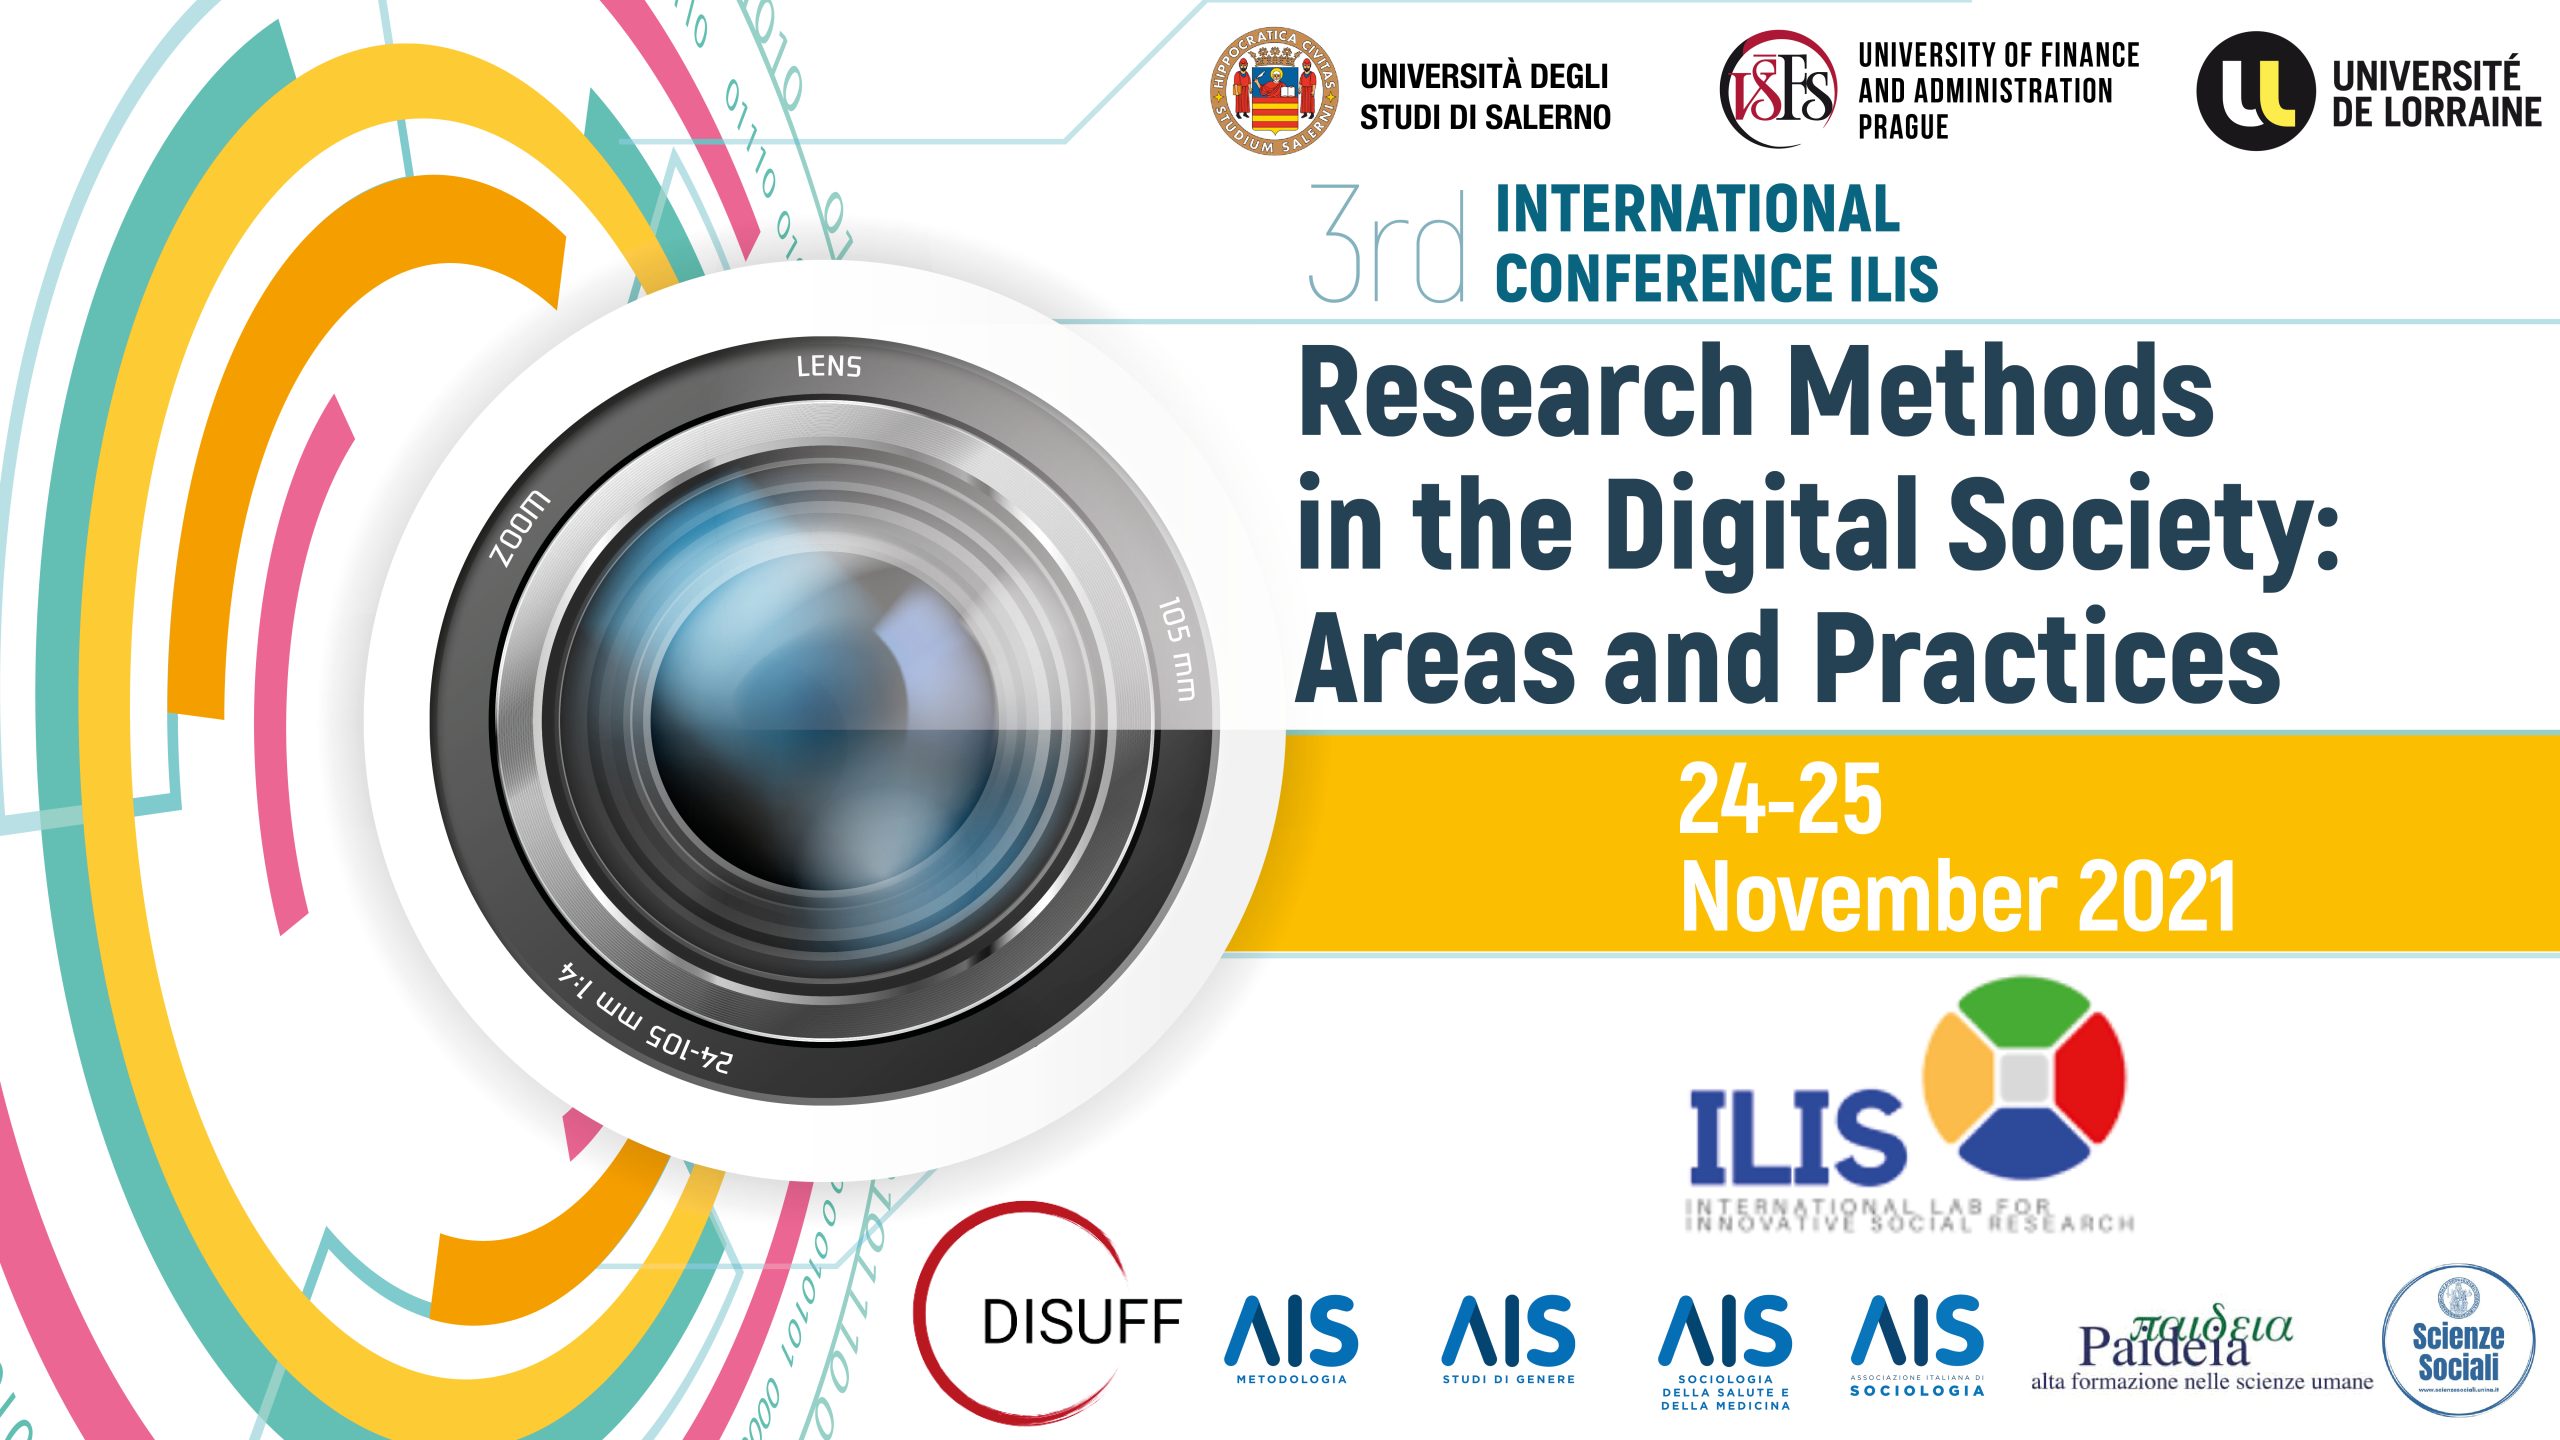 3rd International Conference ILIS